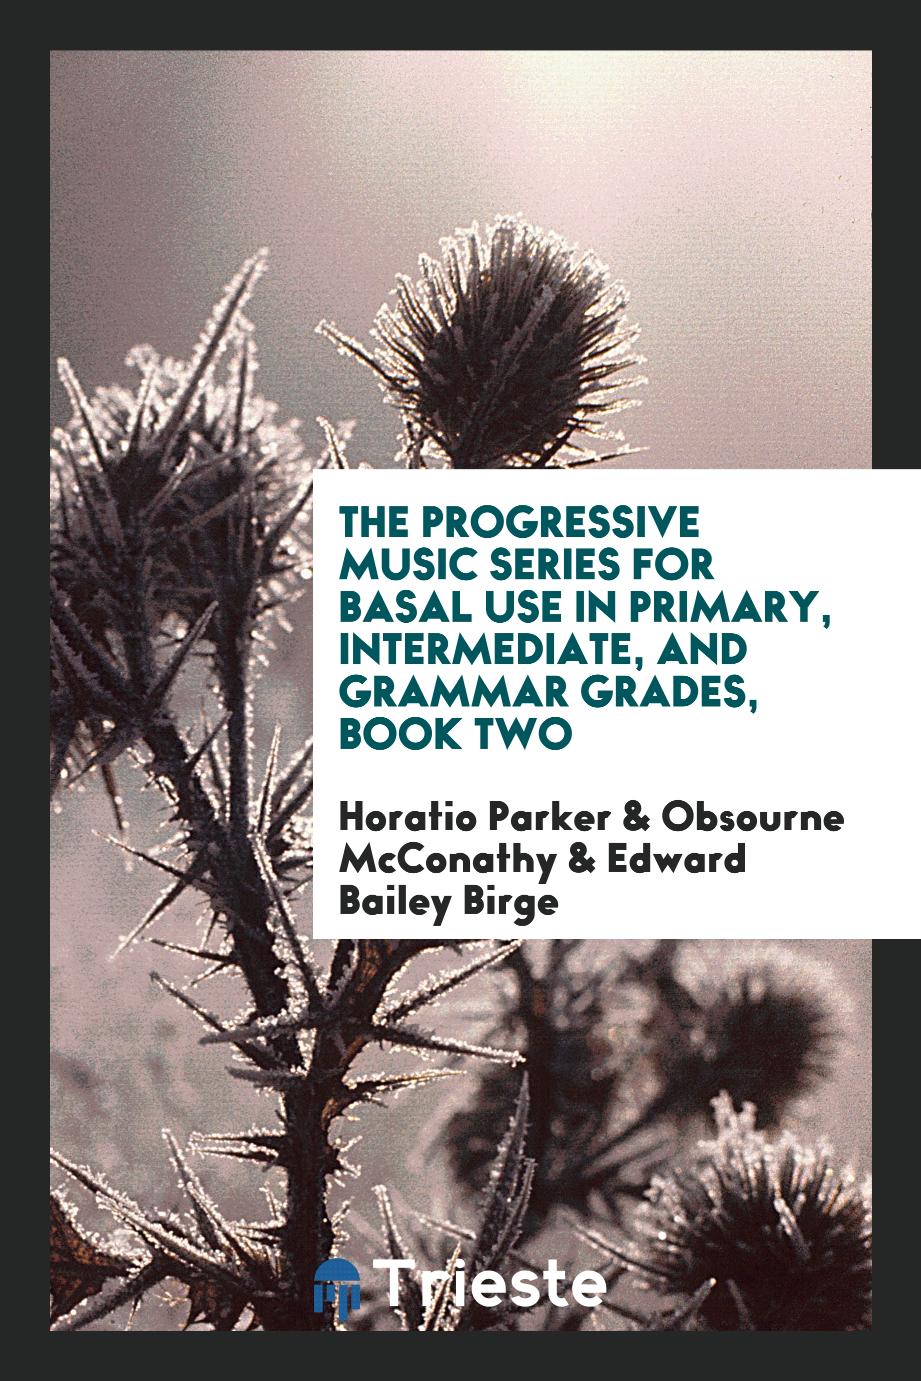 The Progressive Music Series for Basal Use in Primary, Intermediate, and Grammar Grades, Book Two